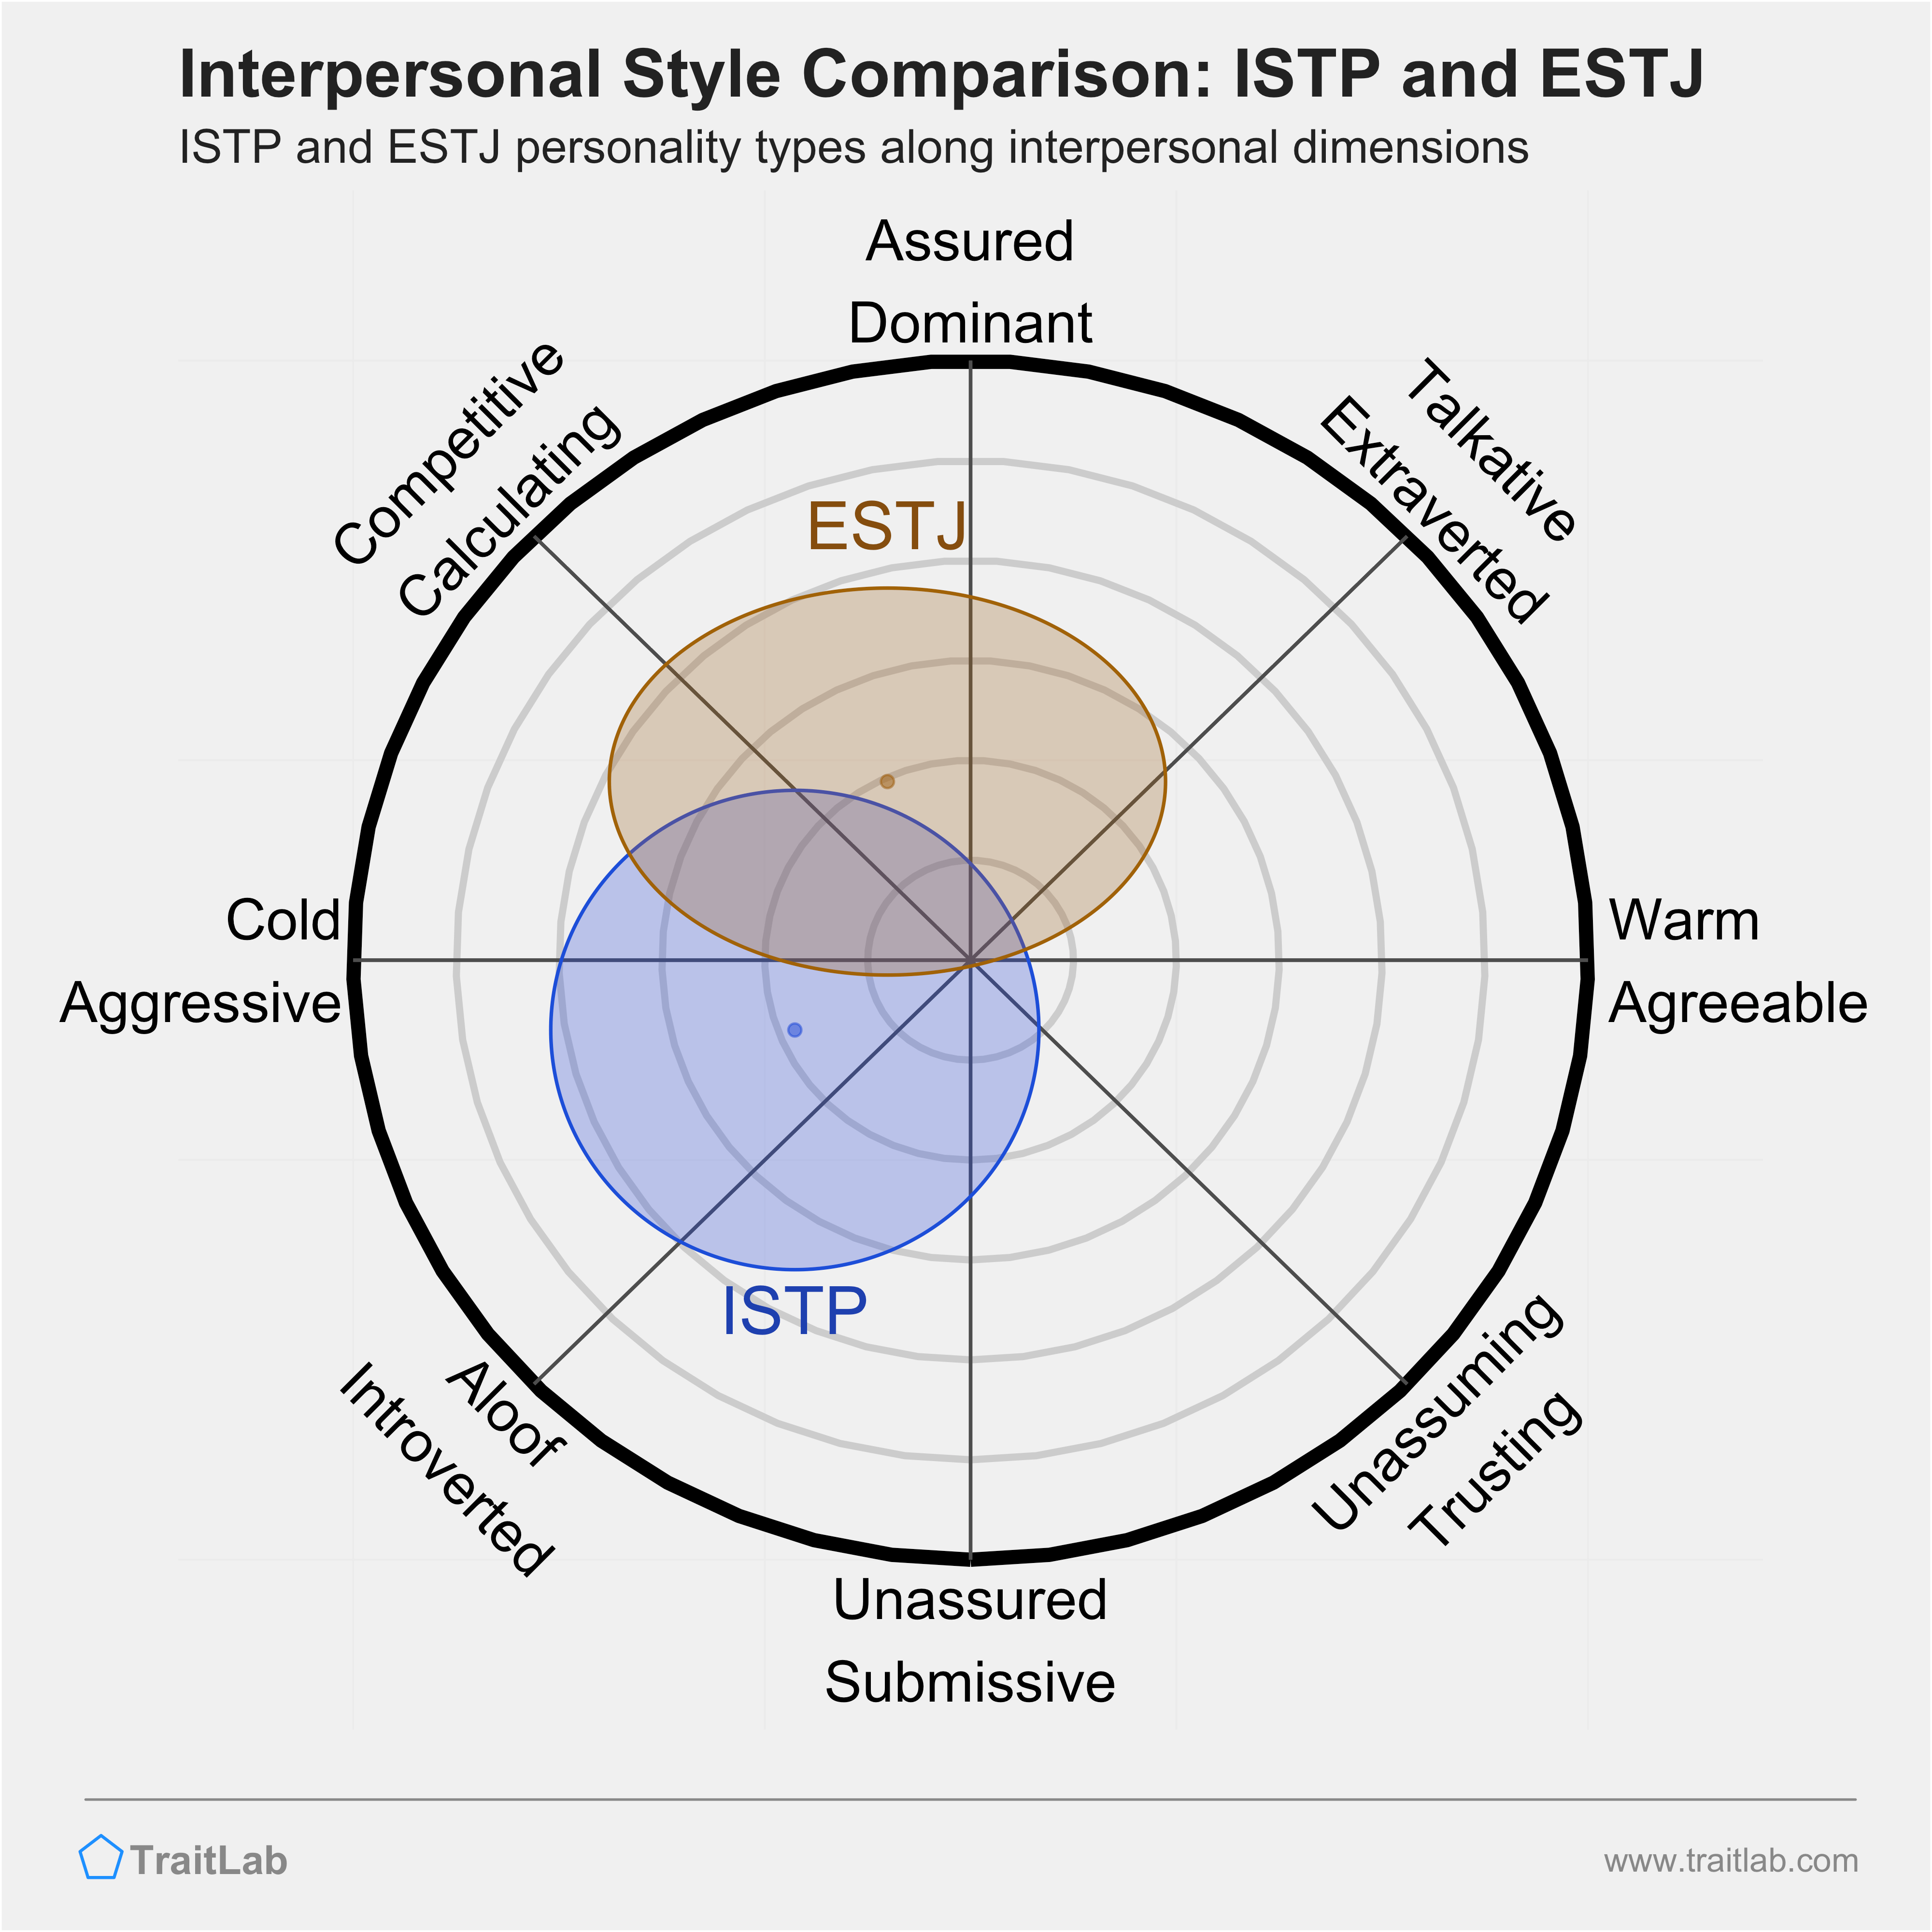 ISTP and ESTJ comparison across interpersonal dimensions